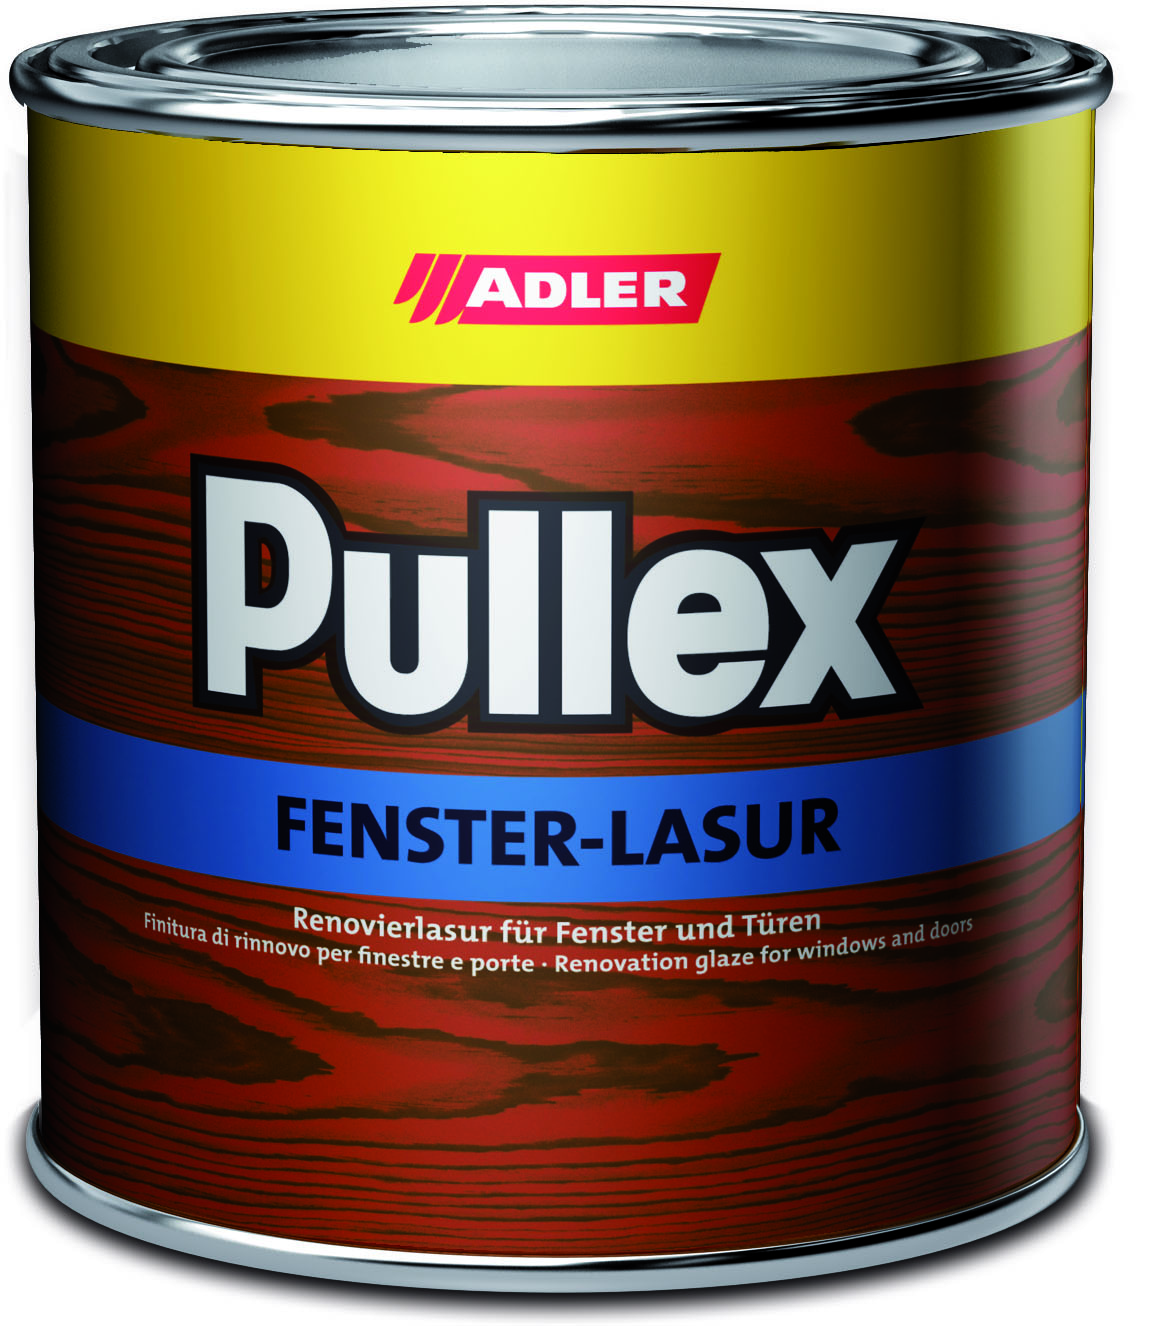 Adler Pullex Fenster Lasur - renovačná lazúra na eurookná, okná, dvere, okenice 750 ml fenster lasur - palisander